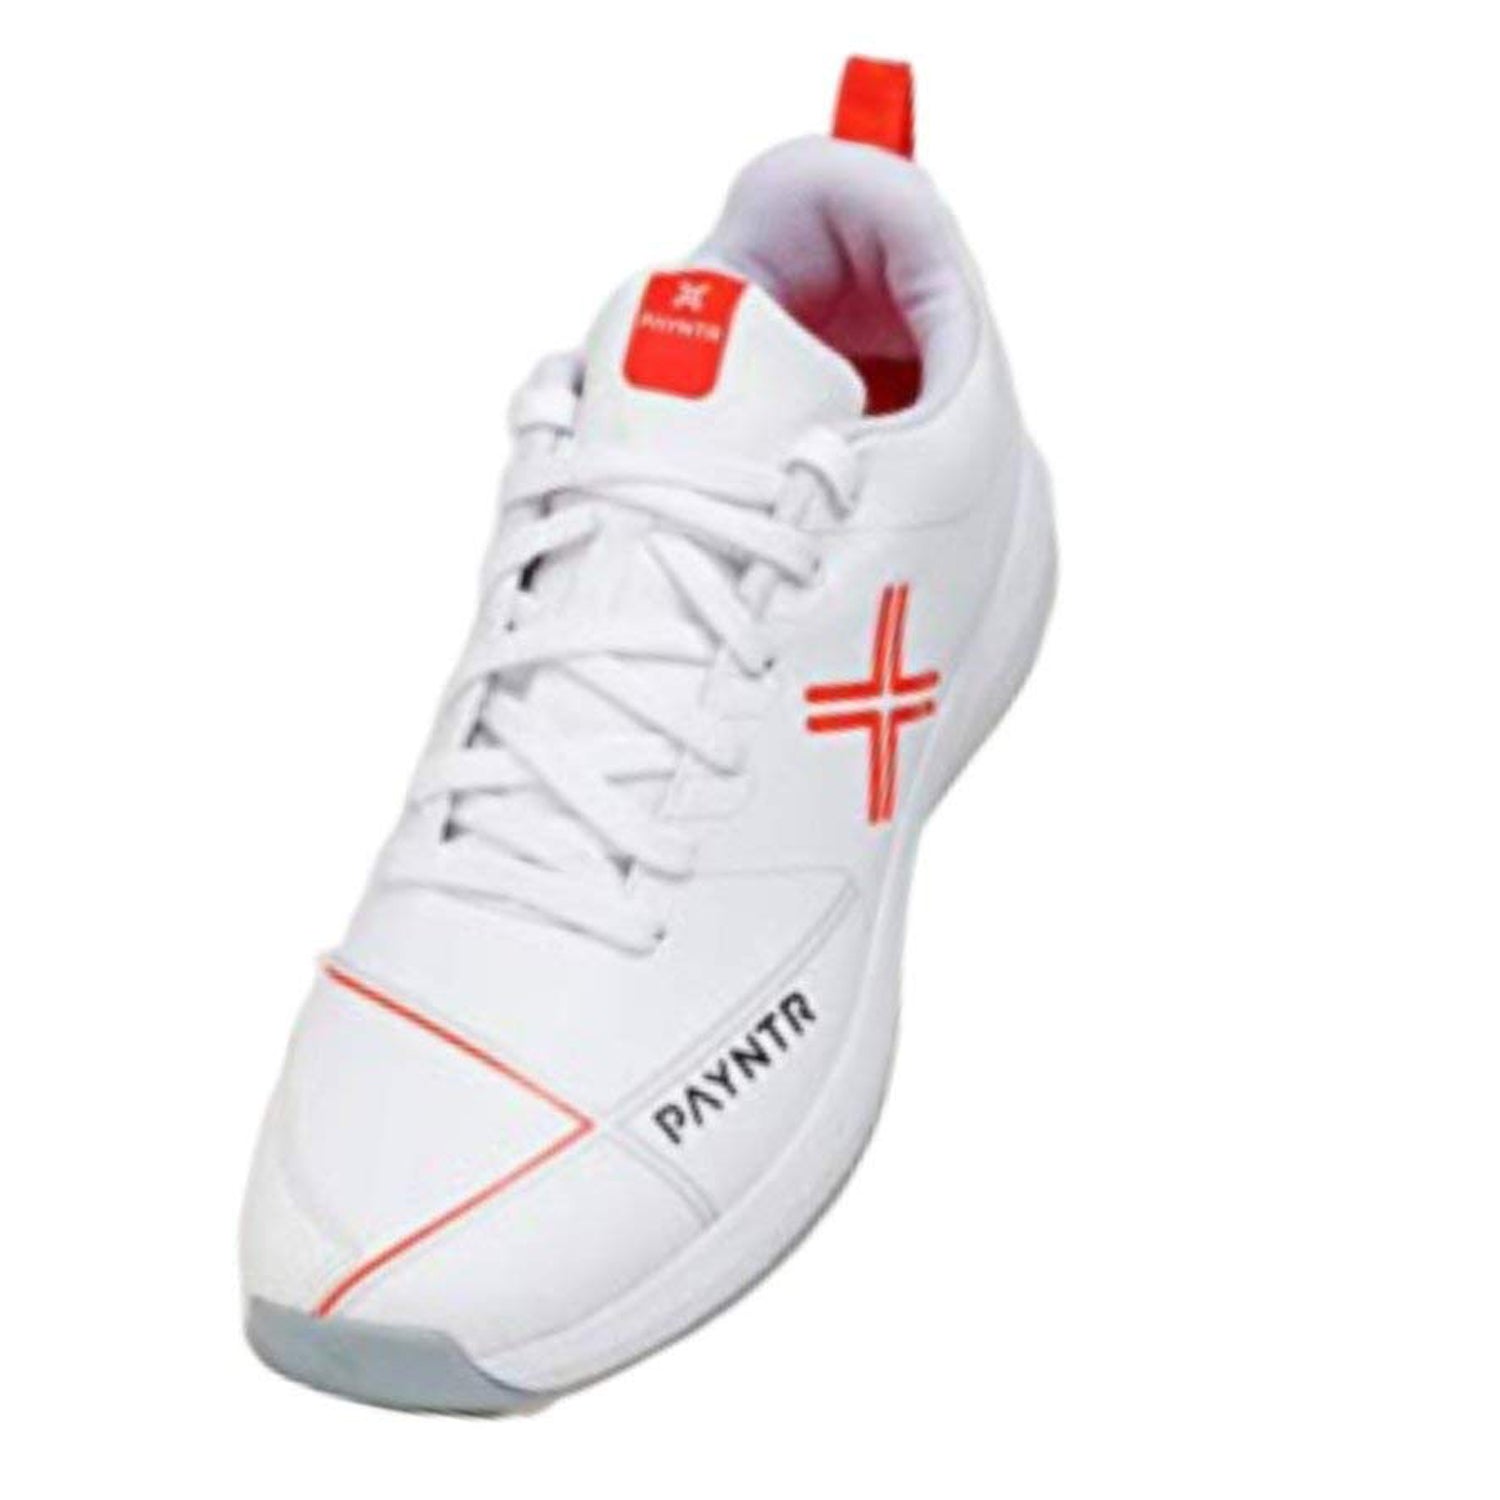 Payntr Spike Cricket Shoes, White - Best Price online Prokicksports.com